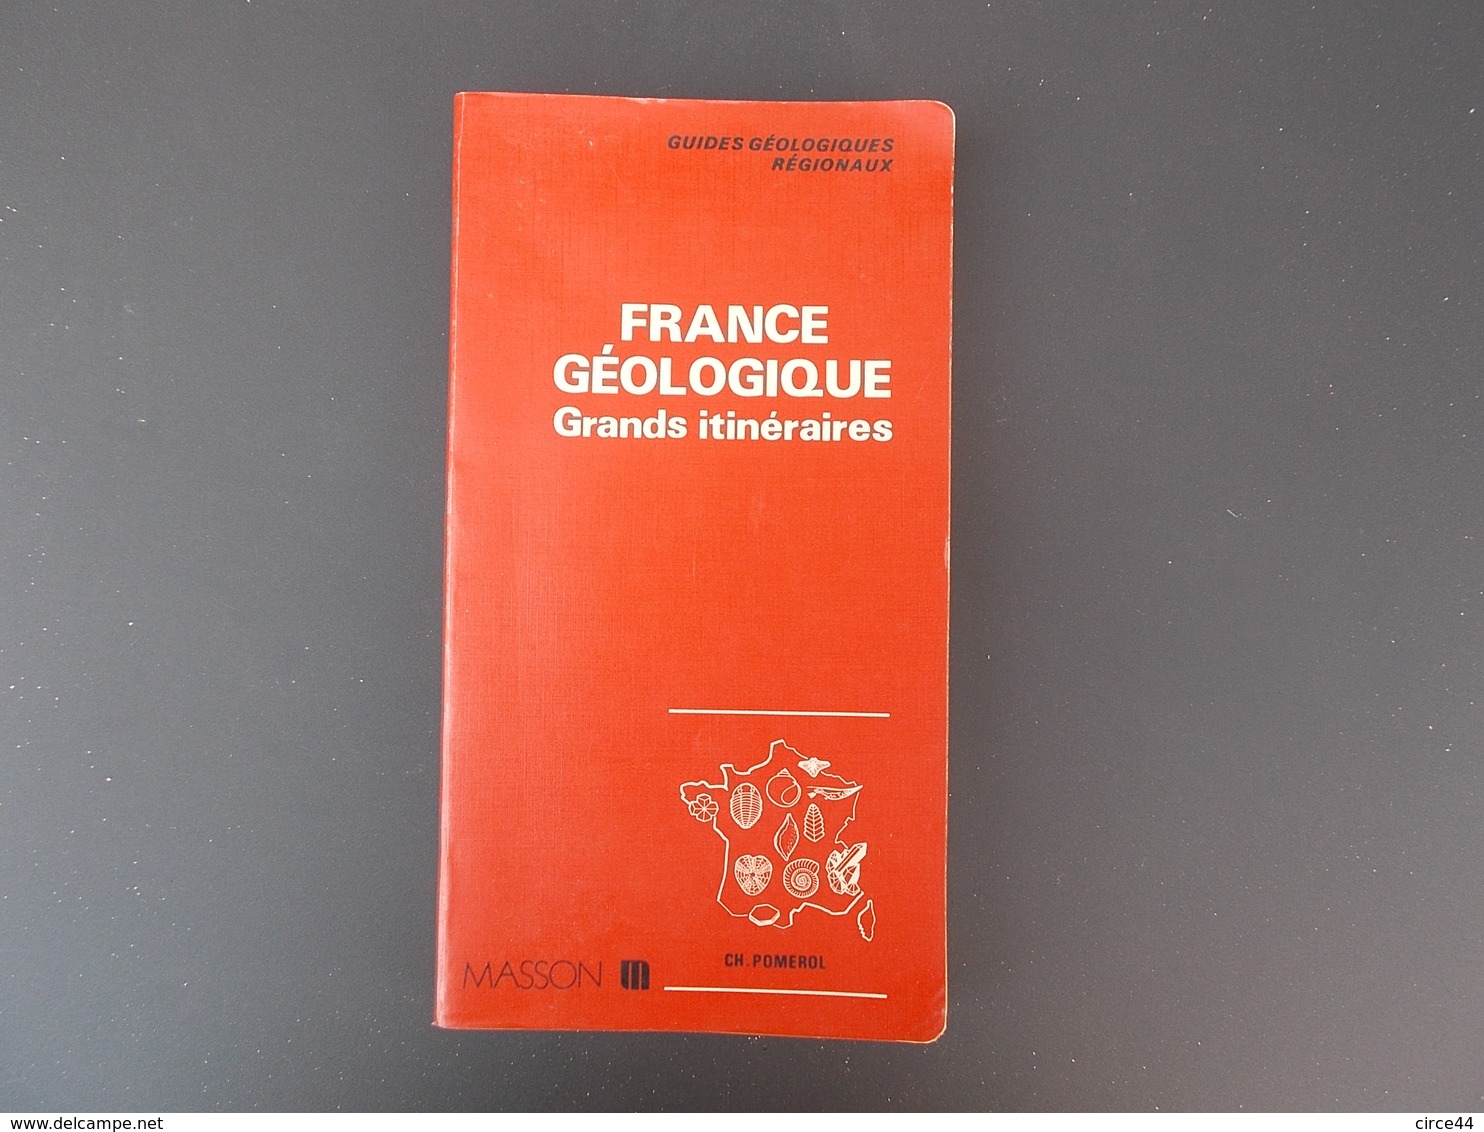 FRANCE GEOLOGIQUE.EDITEUR MASSON.GRANDS ITINERAIRES DE CHARLES POMEROL.EDITION 1980.EPUISEE. - Sciences